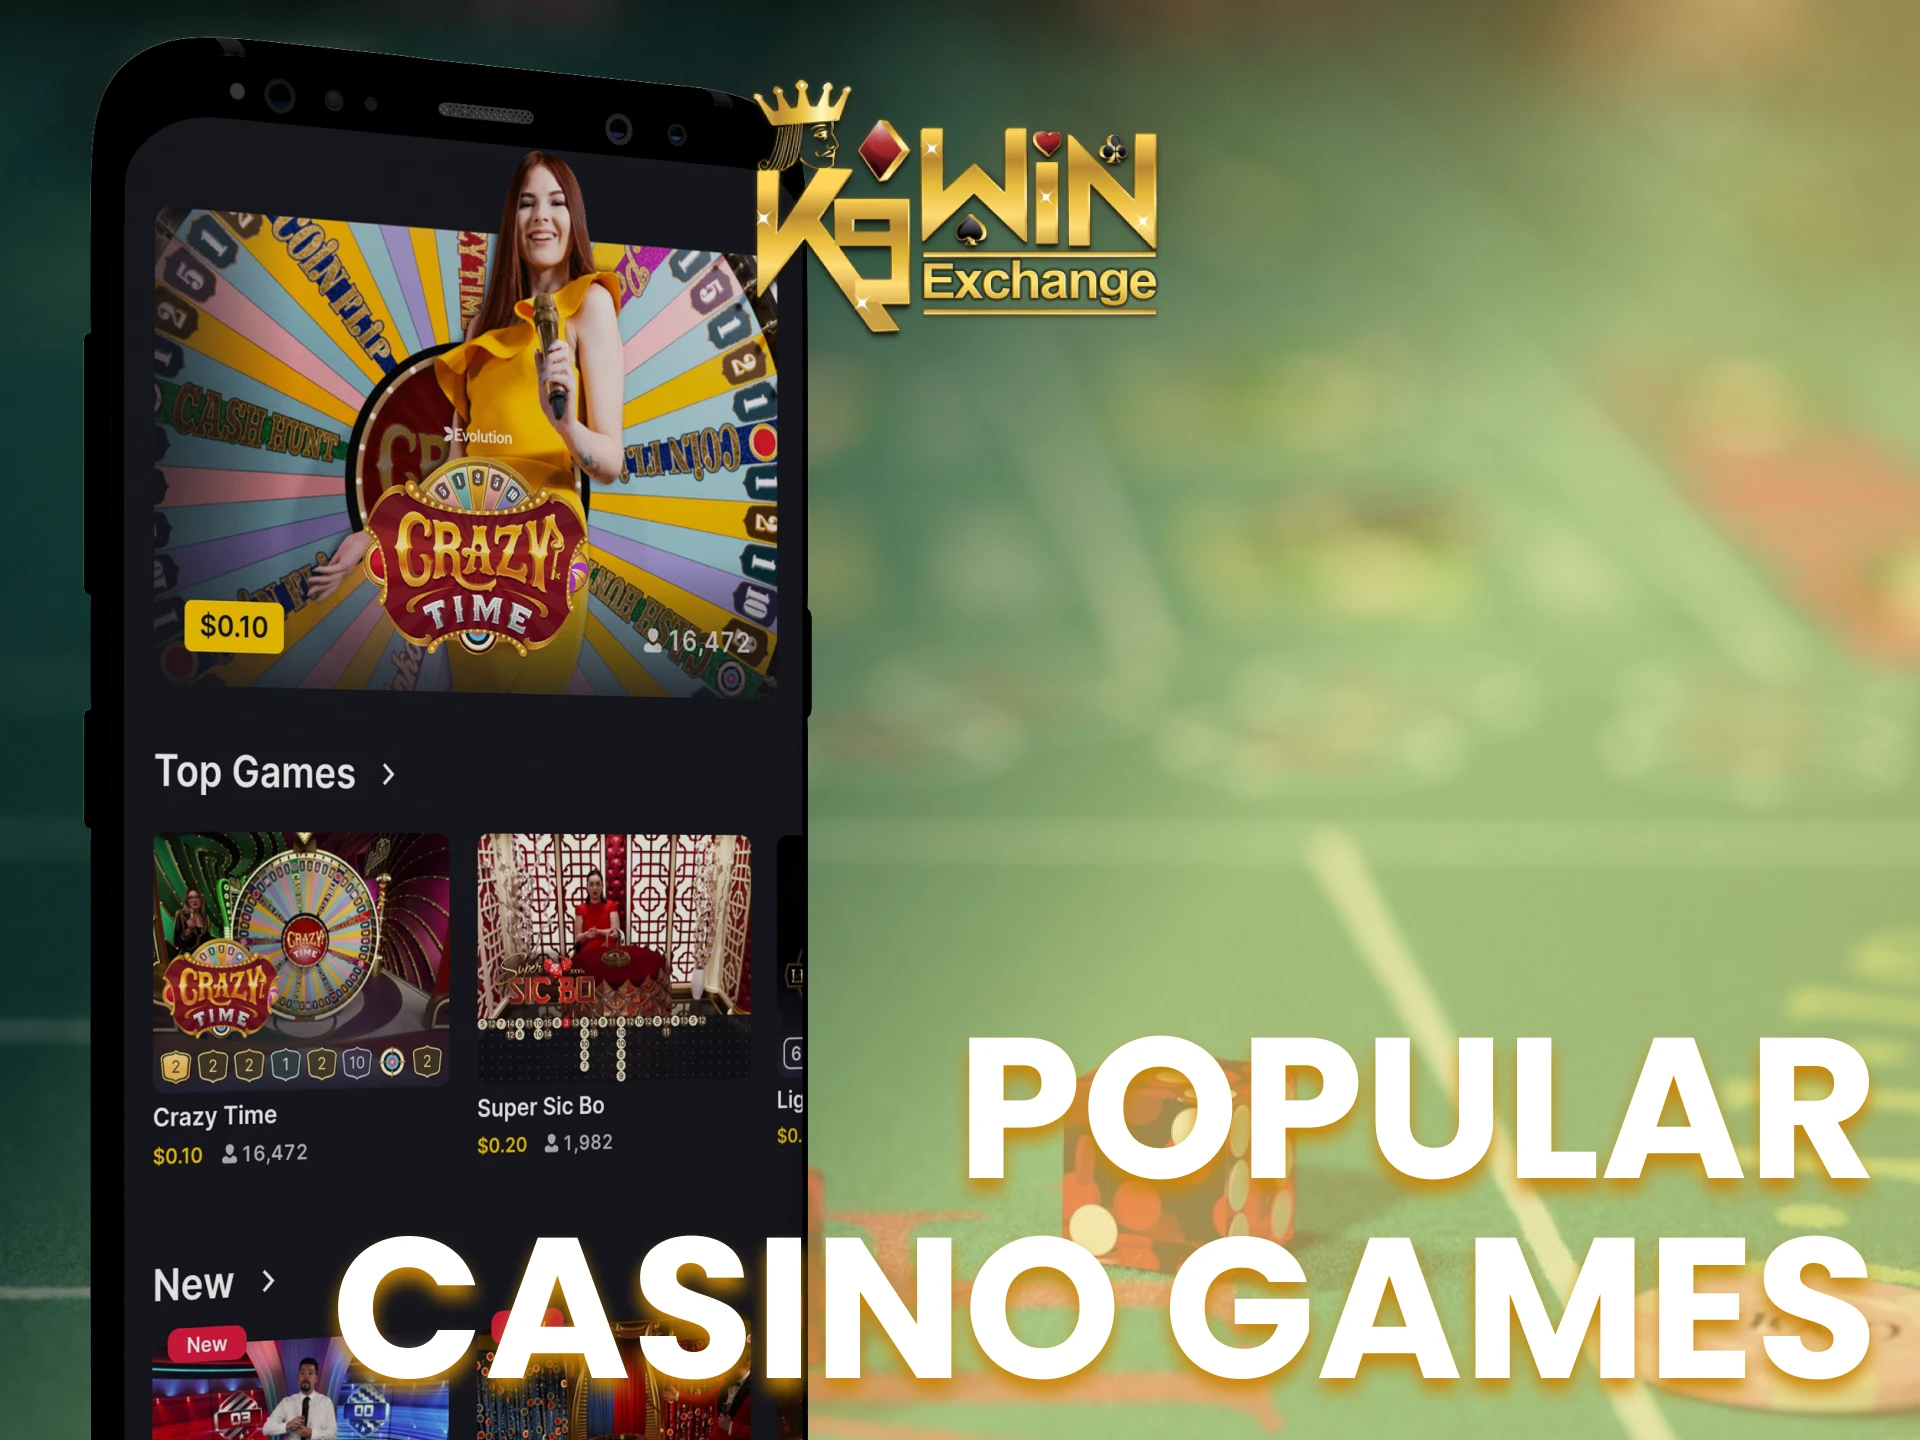 Try new popular casino games in the K9Win app.